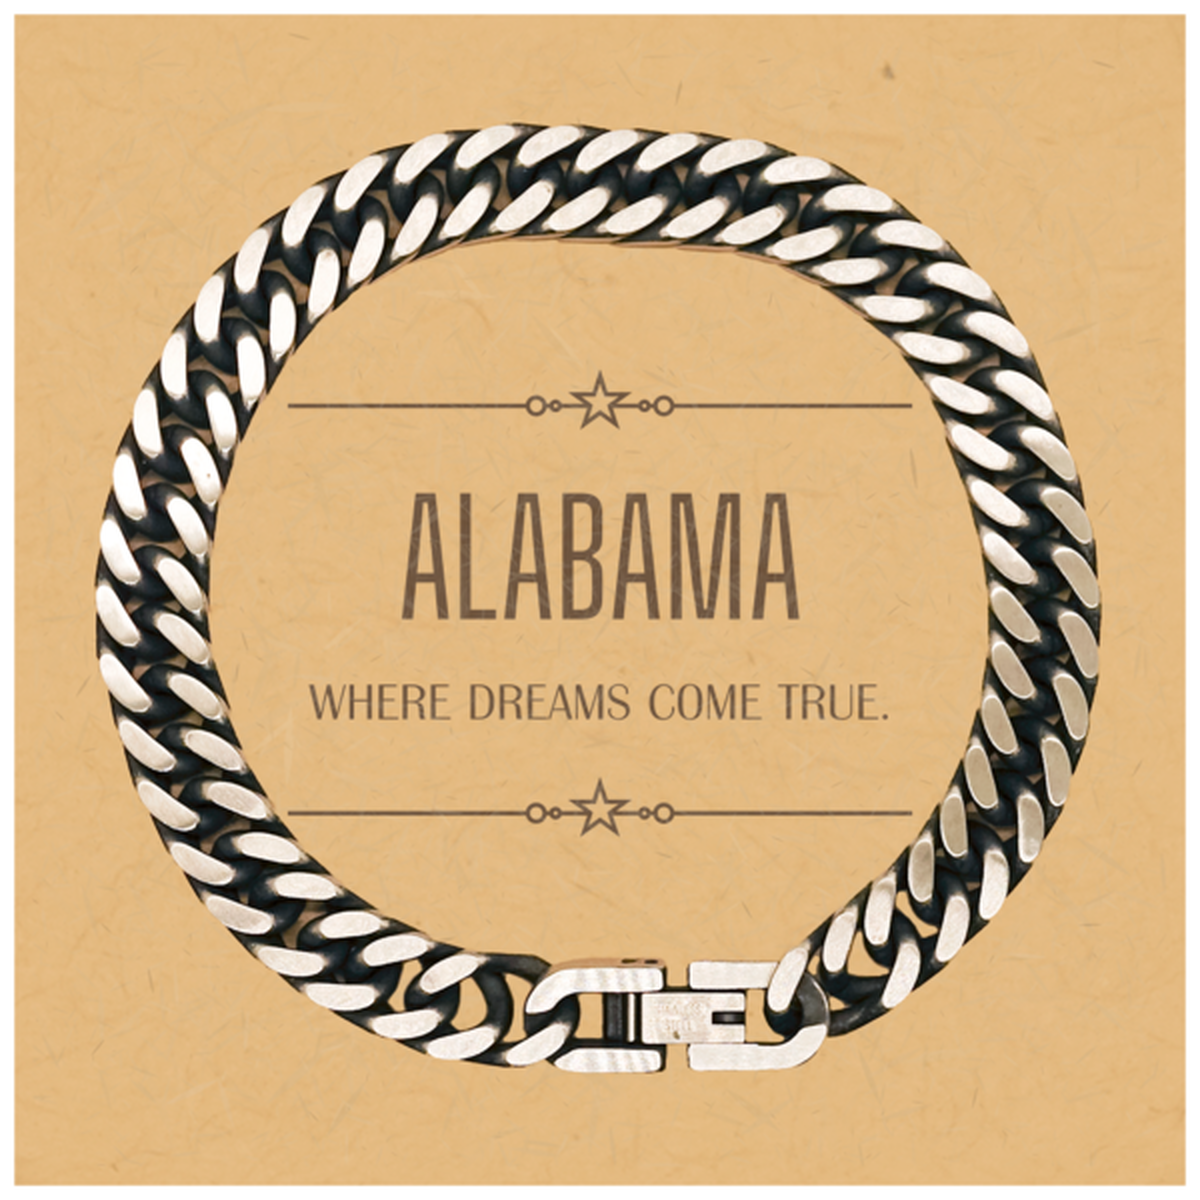 Love Alabama State Cuban Link Chain Bracelet, Alabama Where dreams come true, Birthday Christmas Inspirational Gifts For Alabama Men, Women, Friends